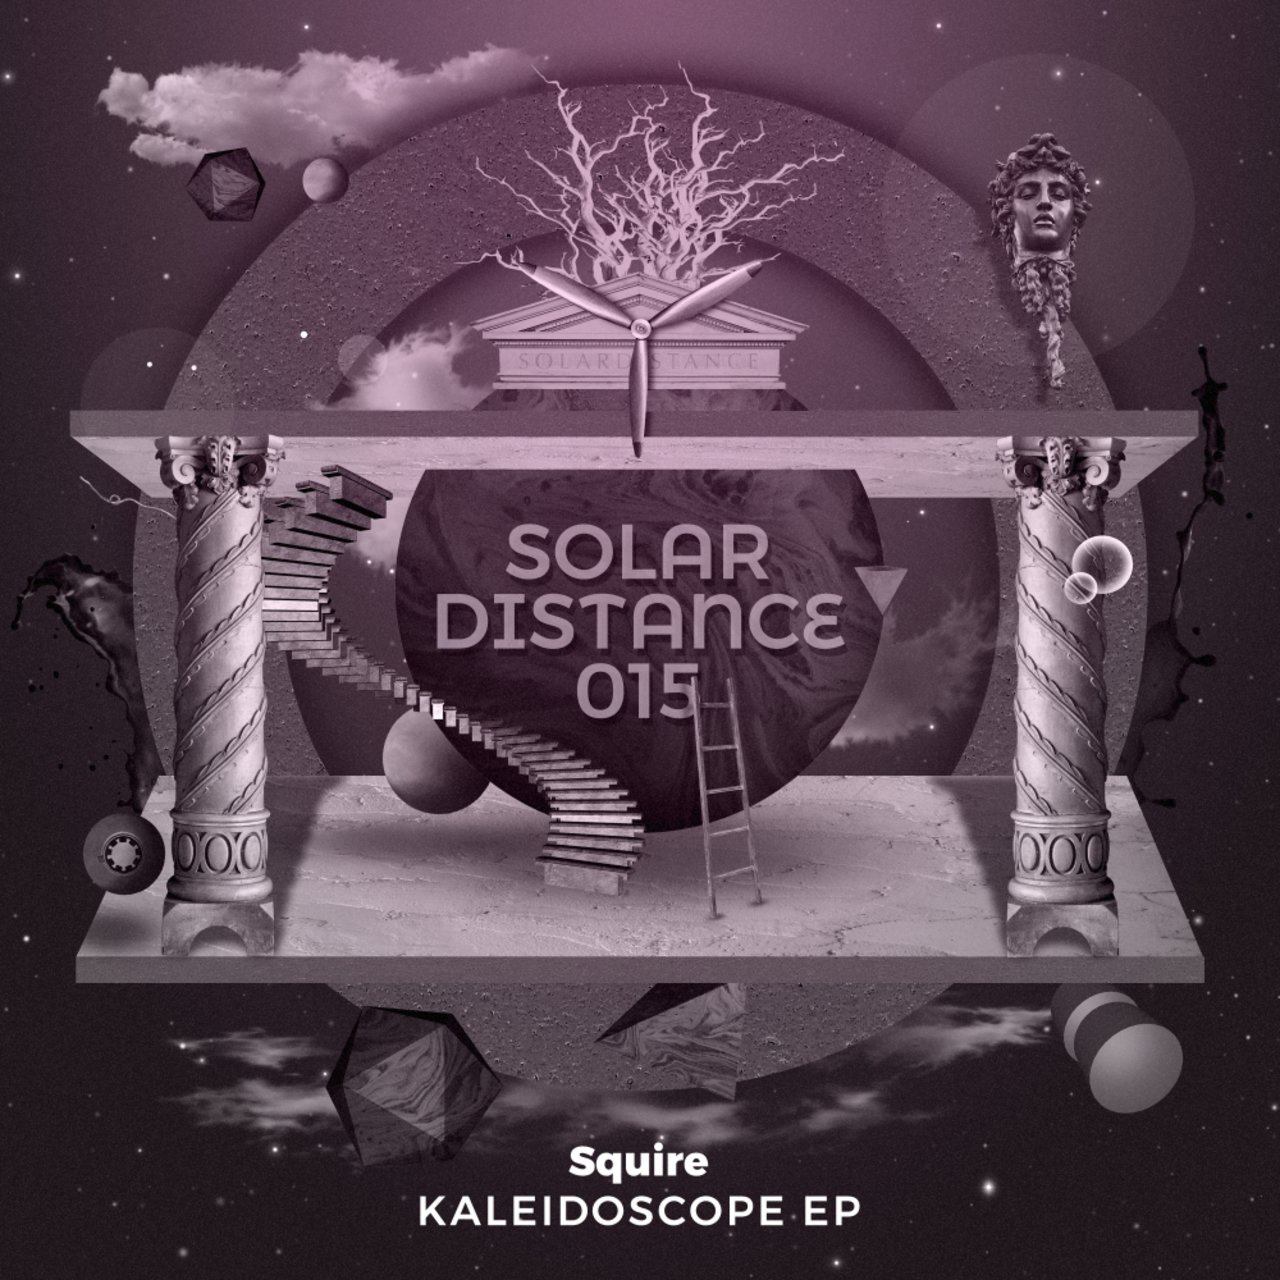 Squire - Kaleidoscope EP / Solar Distance